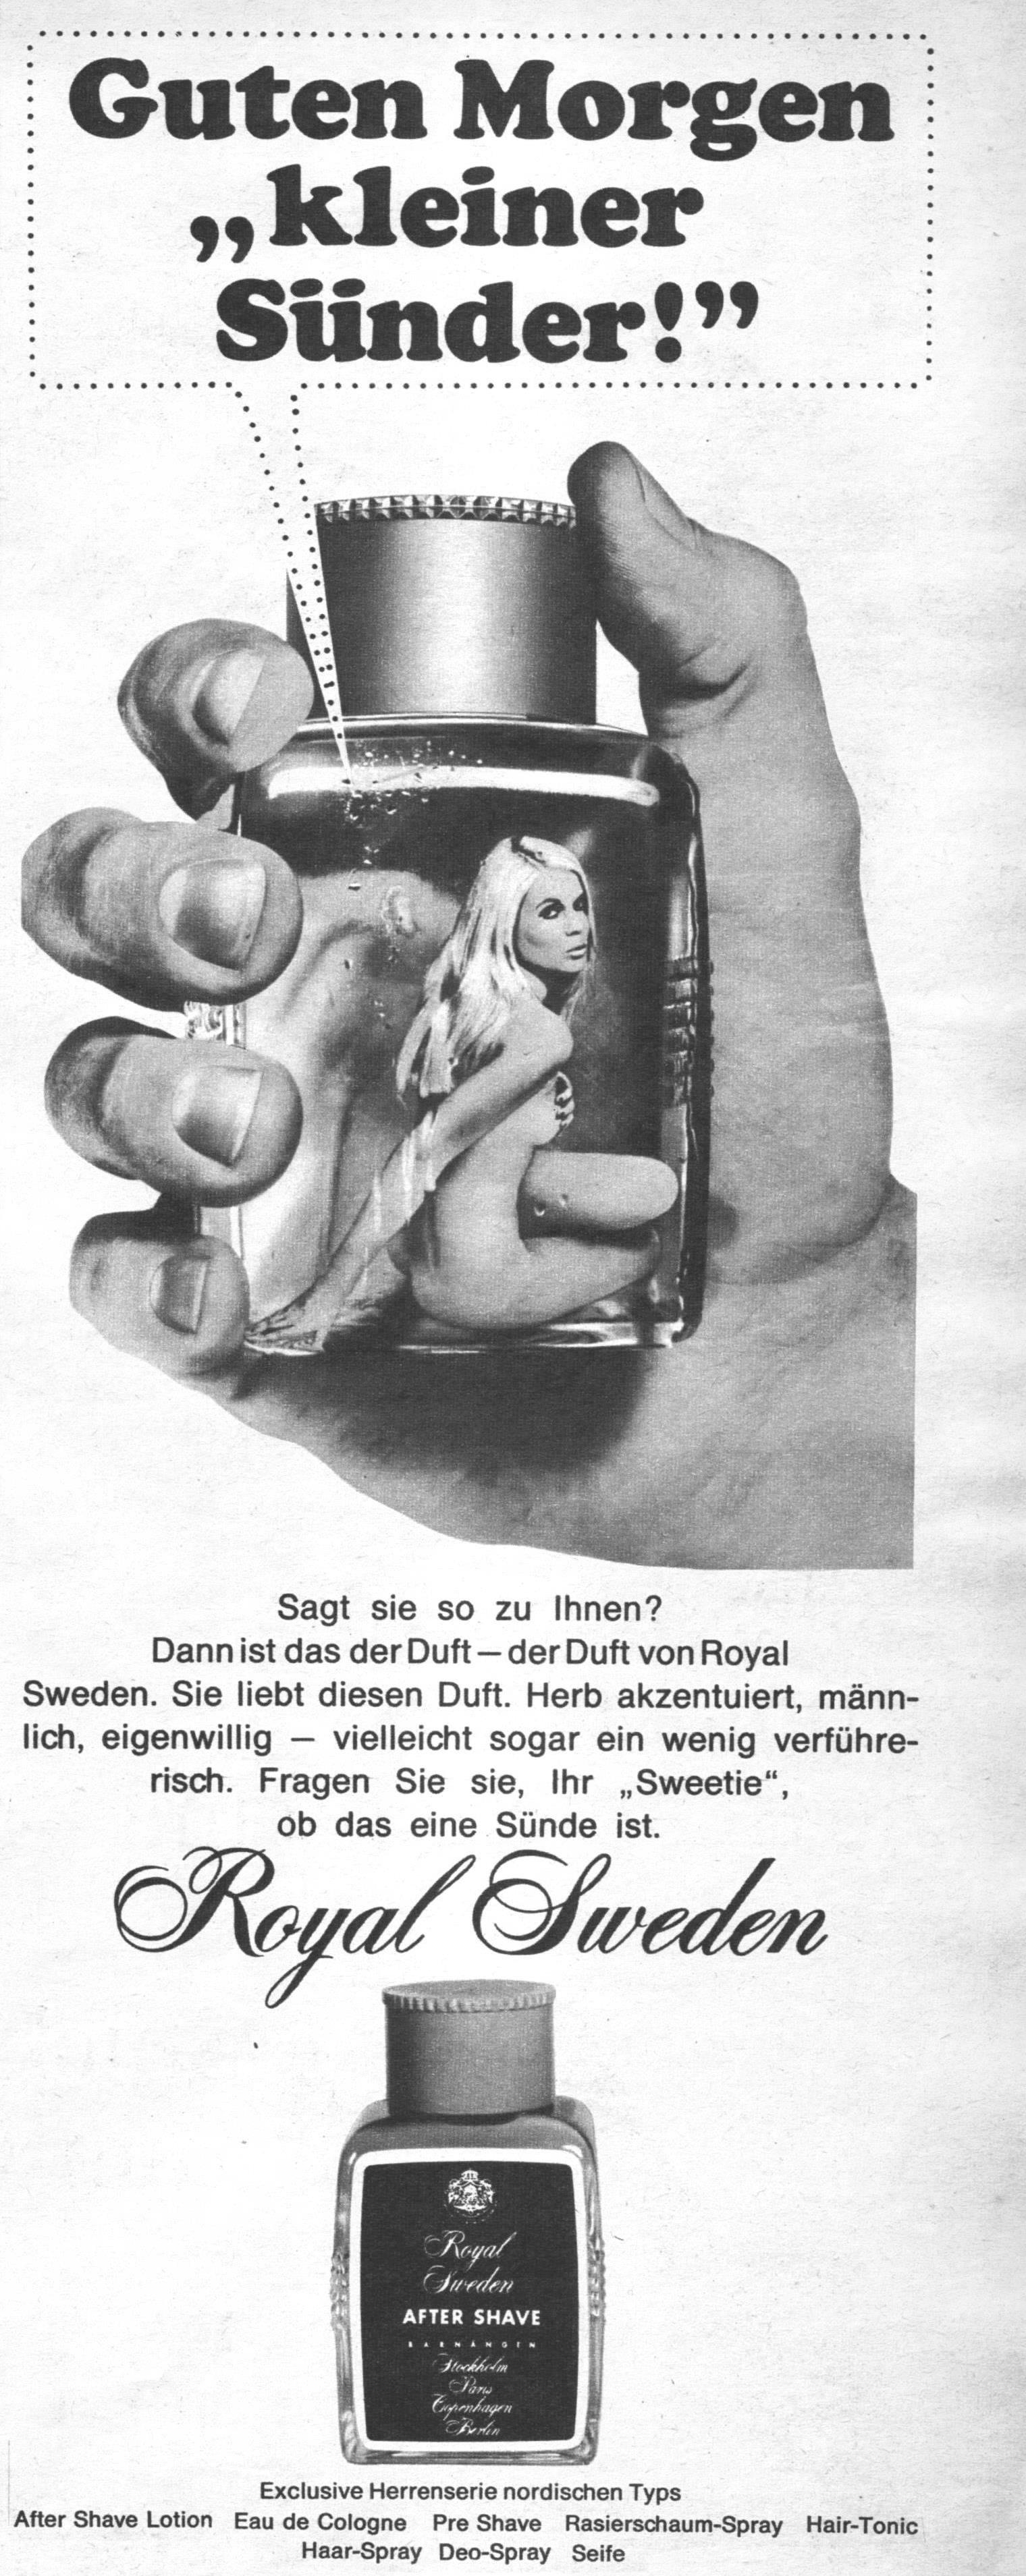 Royal Schweden 1968 0.jpg